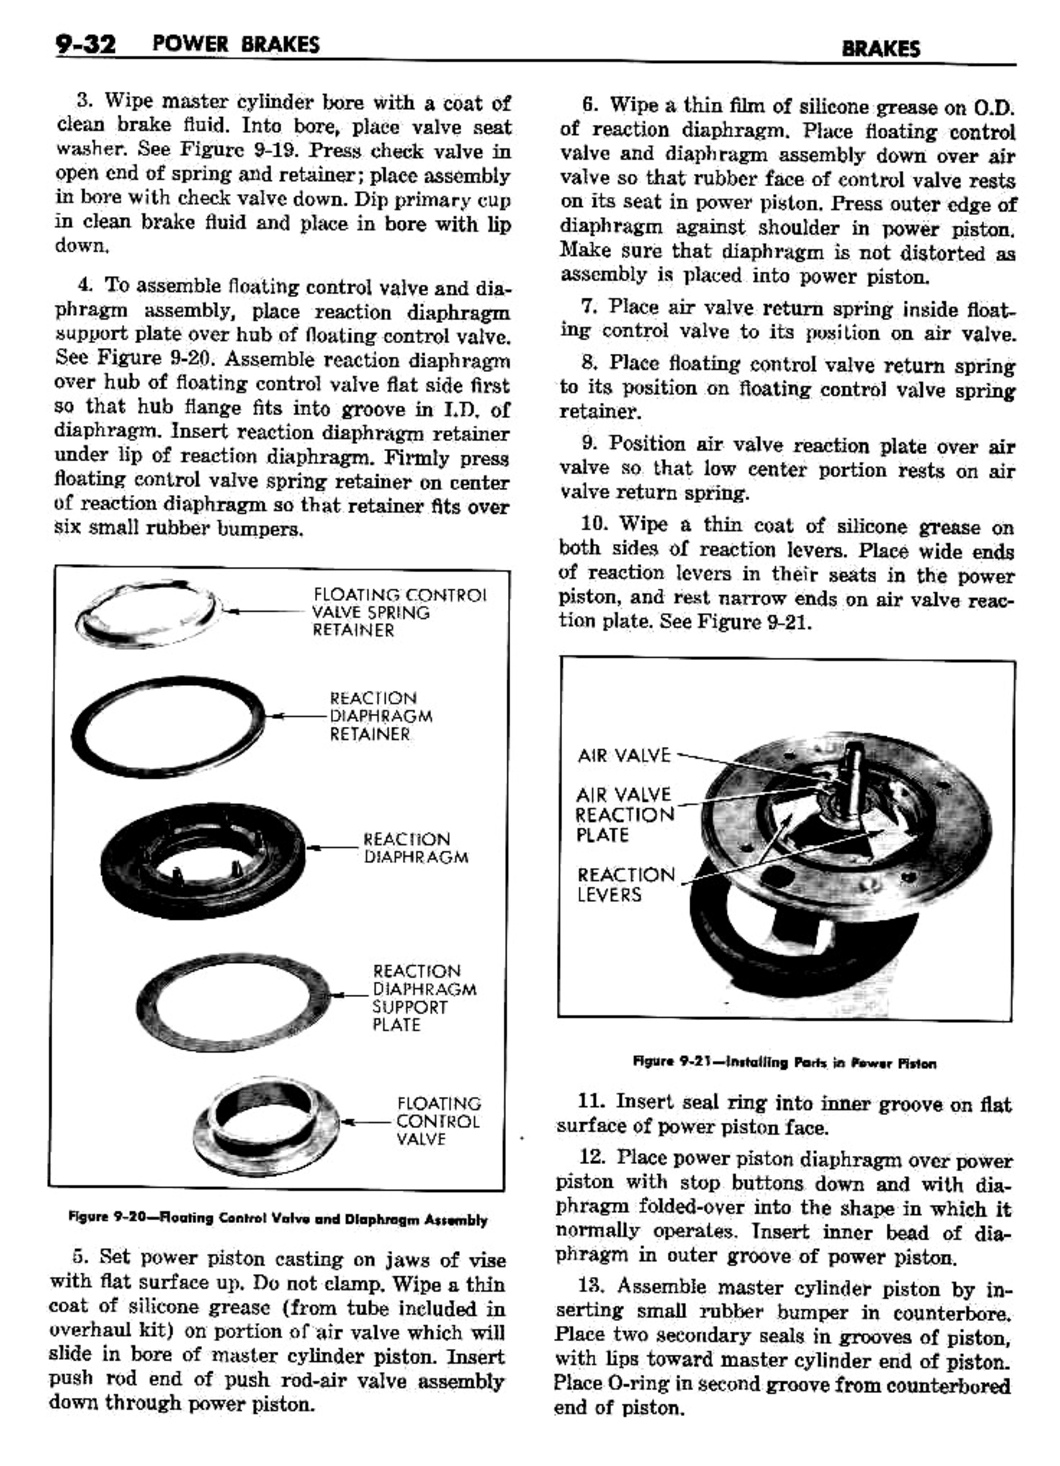 n_10 1960 Buick Shop Manual - Brakes-032-032.jpg